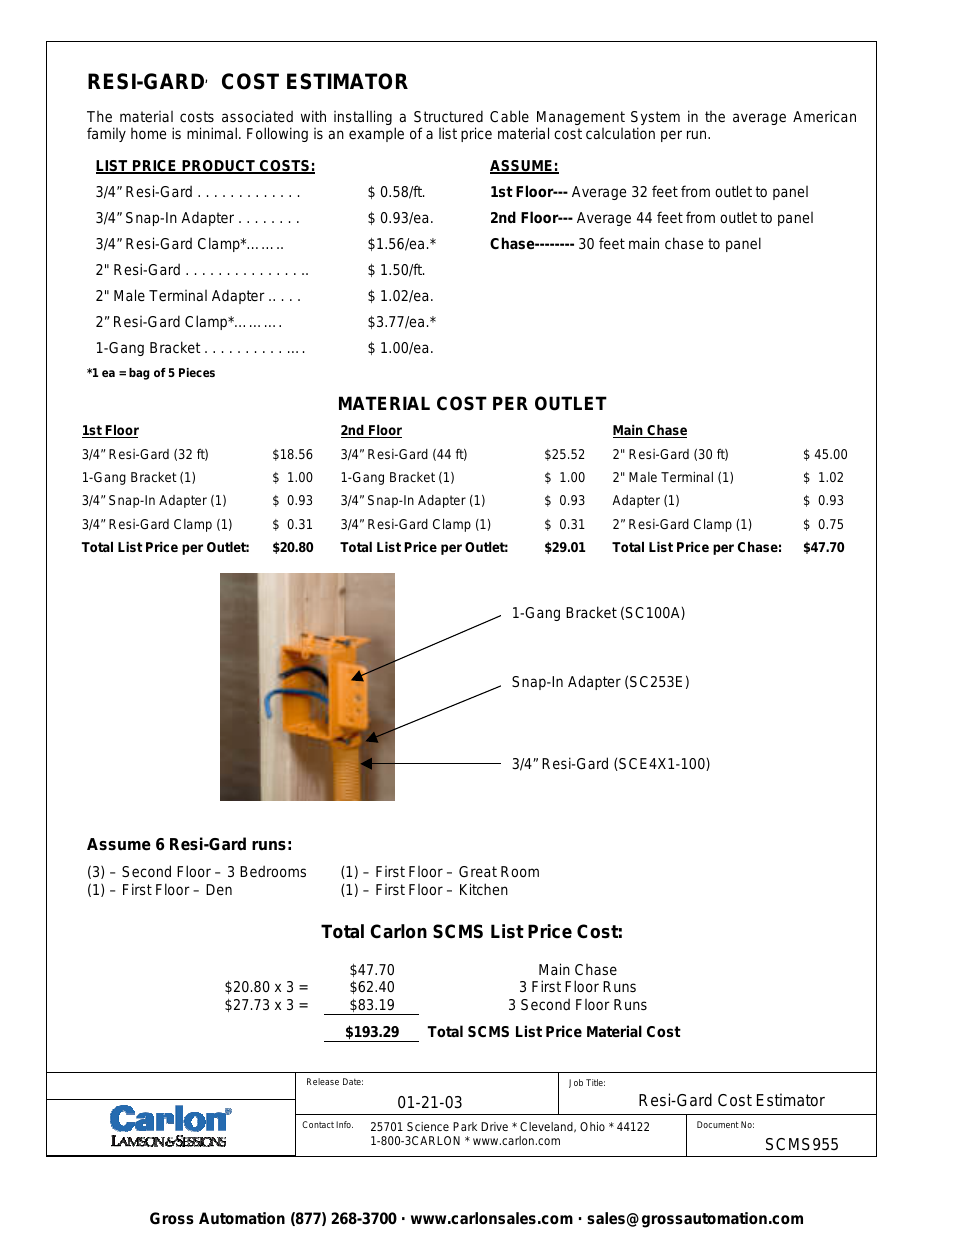 SCMS Cost Estimator Sheet - Low Res